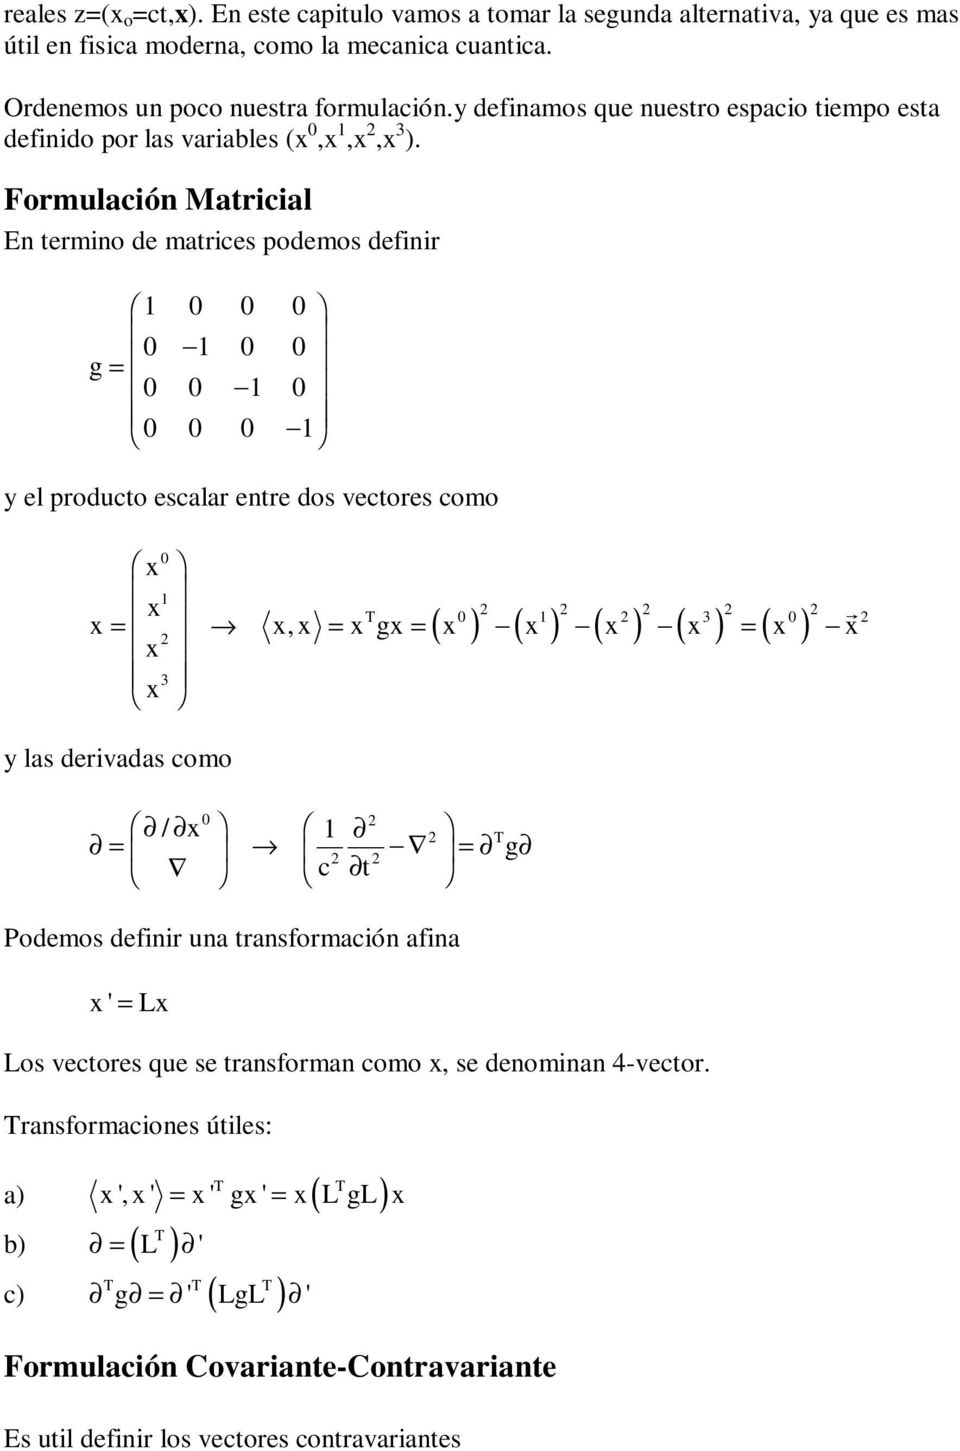 Frmulación Matricial En termin de matrices pdems definir 1 0 0 0 0 1 0 0 g = 0 0 1 0 0 0 0 1 y el prduct escalar entre ds vectres cm 0 x 1 x x = x,x = xgx = ( x ) ( x ) ( x ) ( x ) = ( x ) x